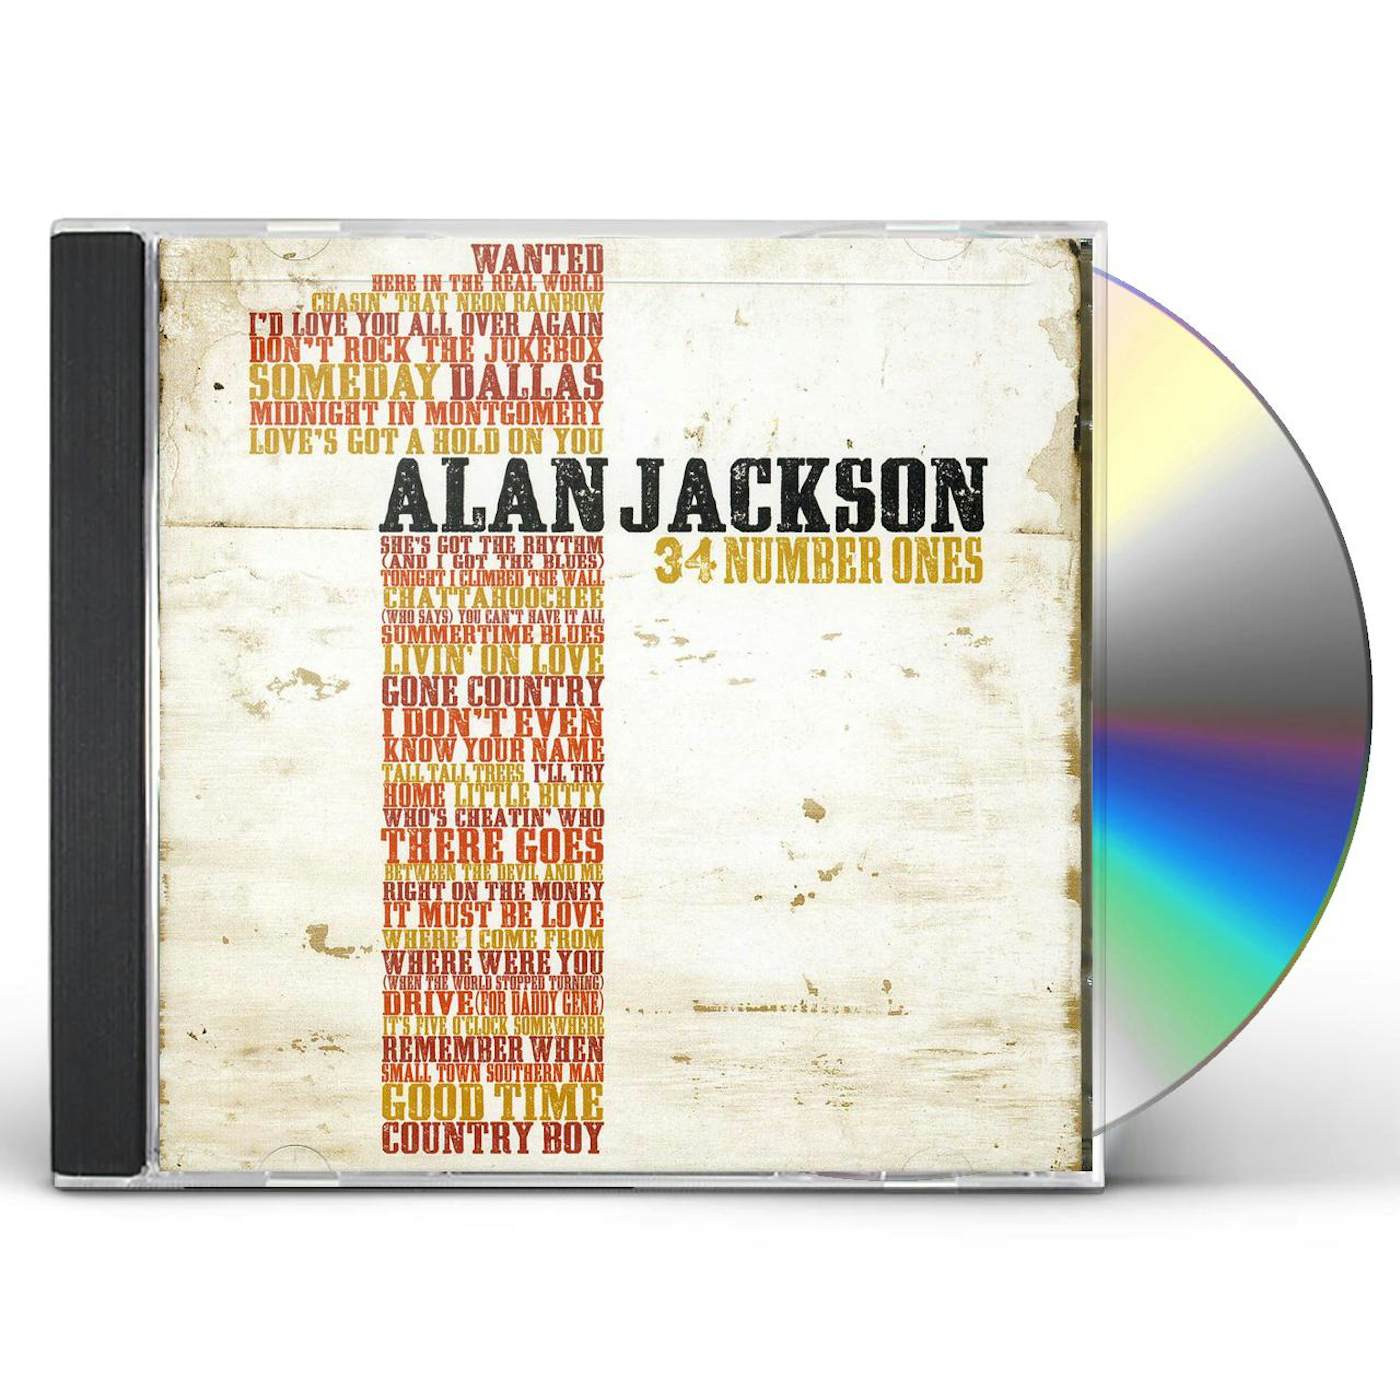 Alan Jackson 34 NUMBER ONES CD